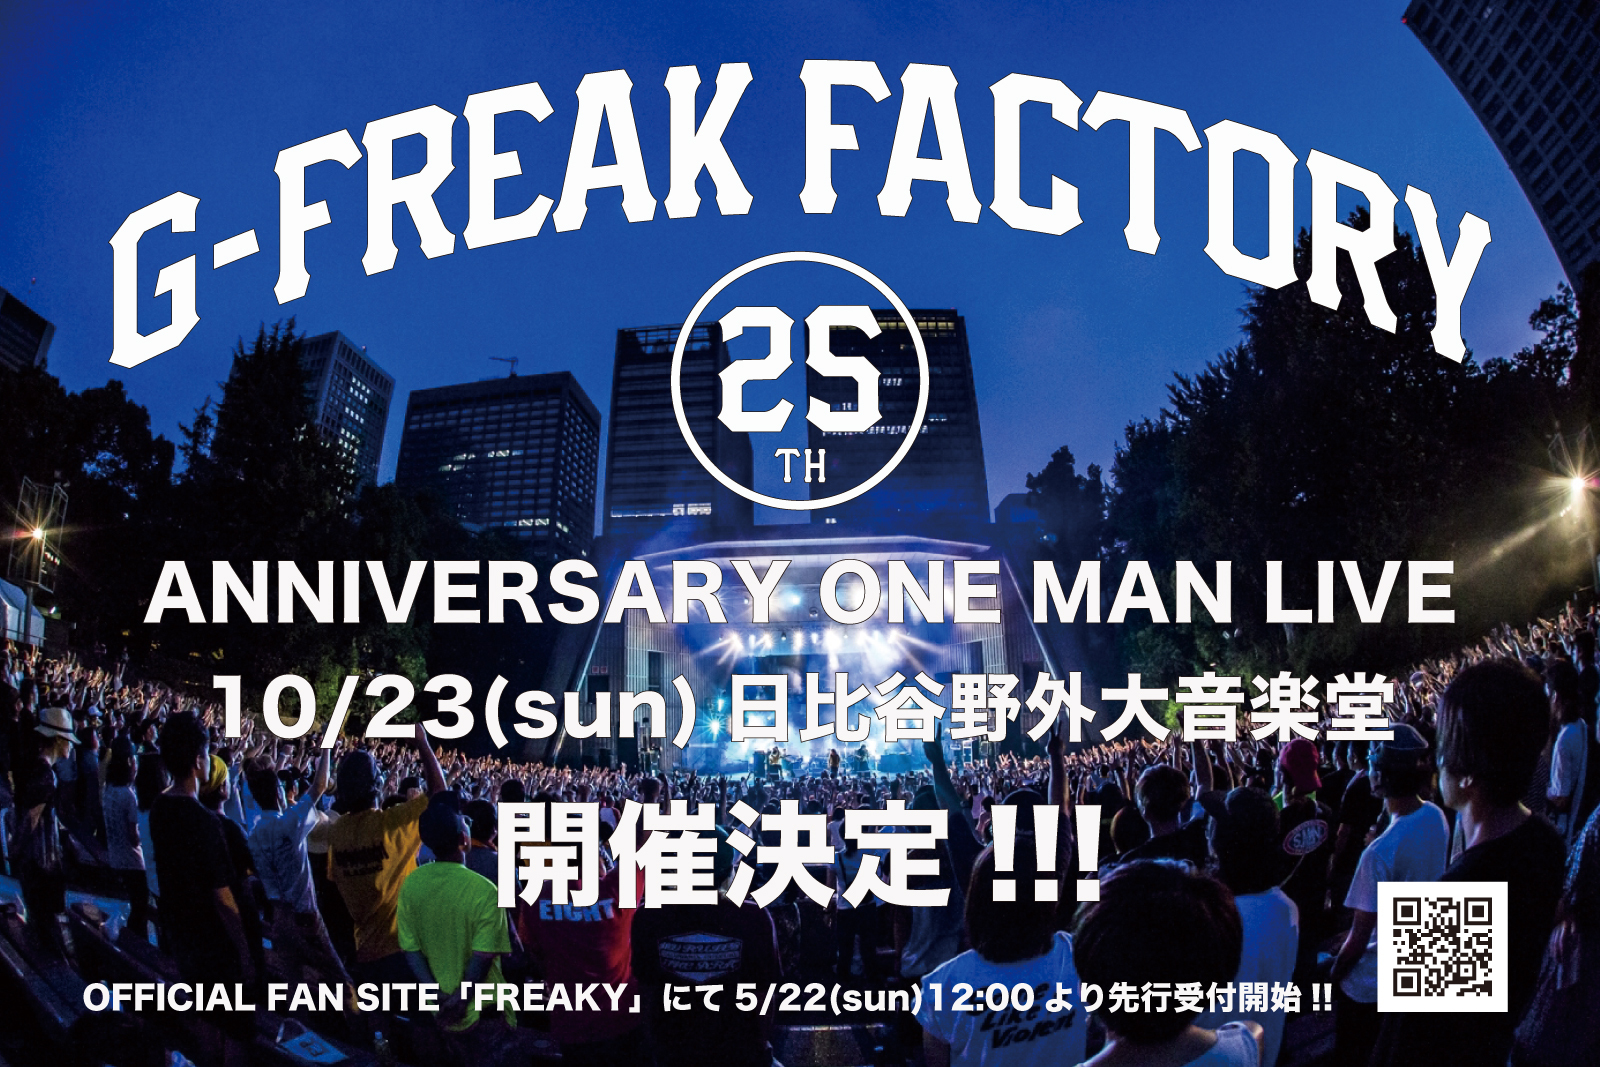 G-FREAK FACTORY 25th ANNIVERSARY ONE MAN LIVE 開催決定！